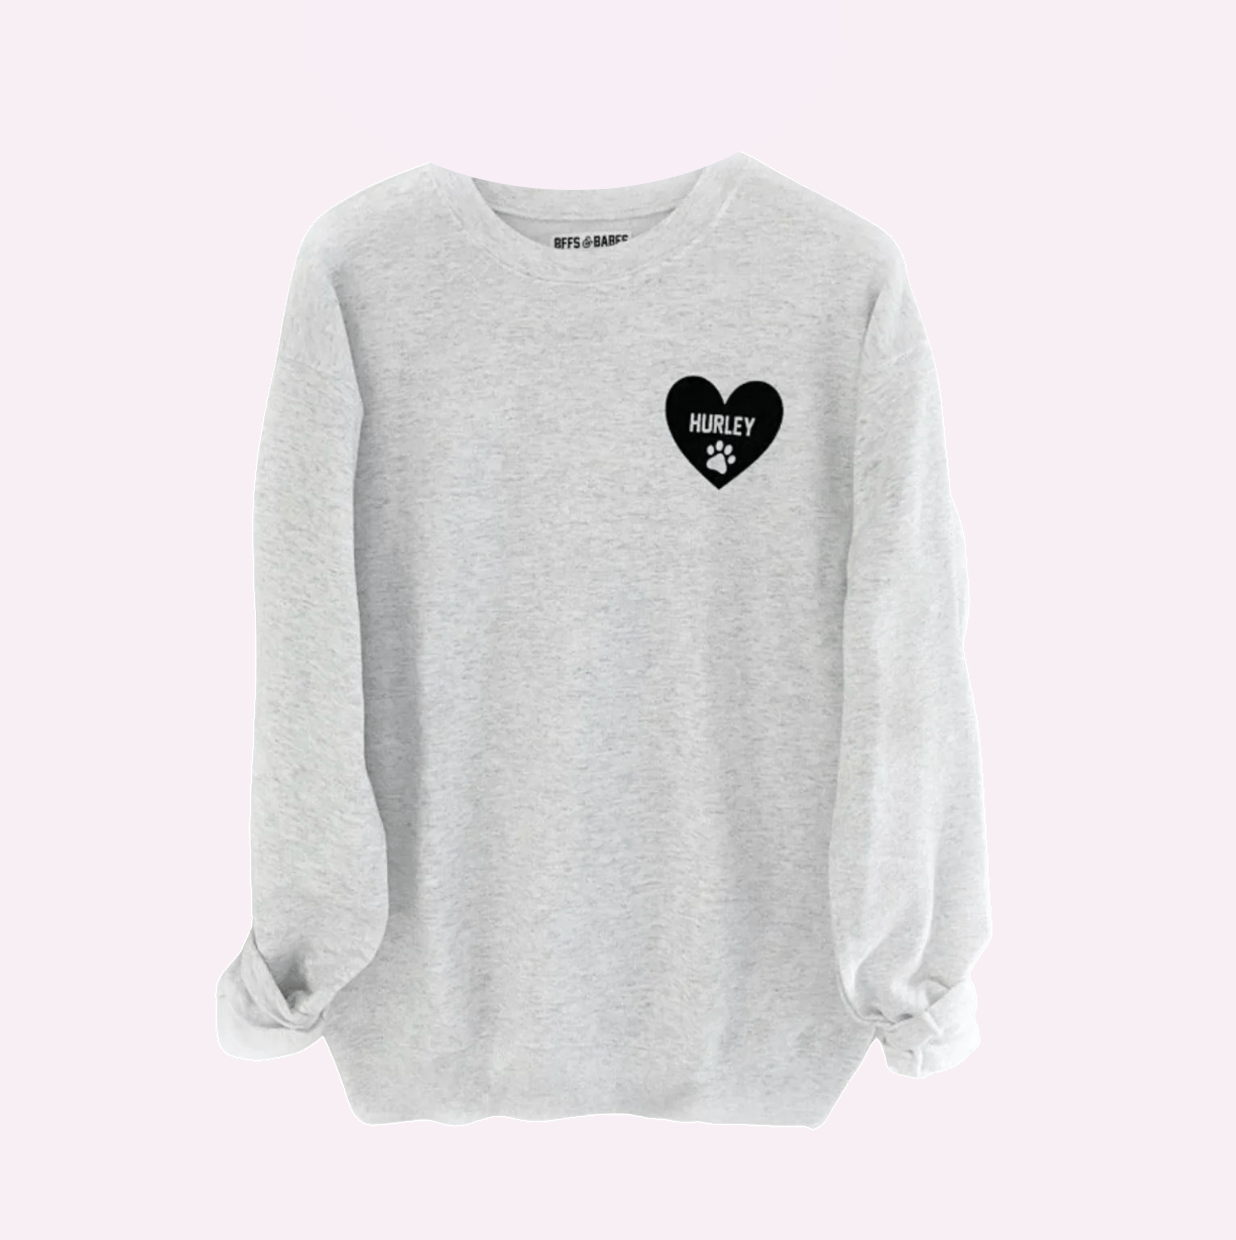 HEART U MOST ♡ gray sweatshirt with personalized heart paw print